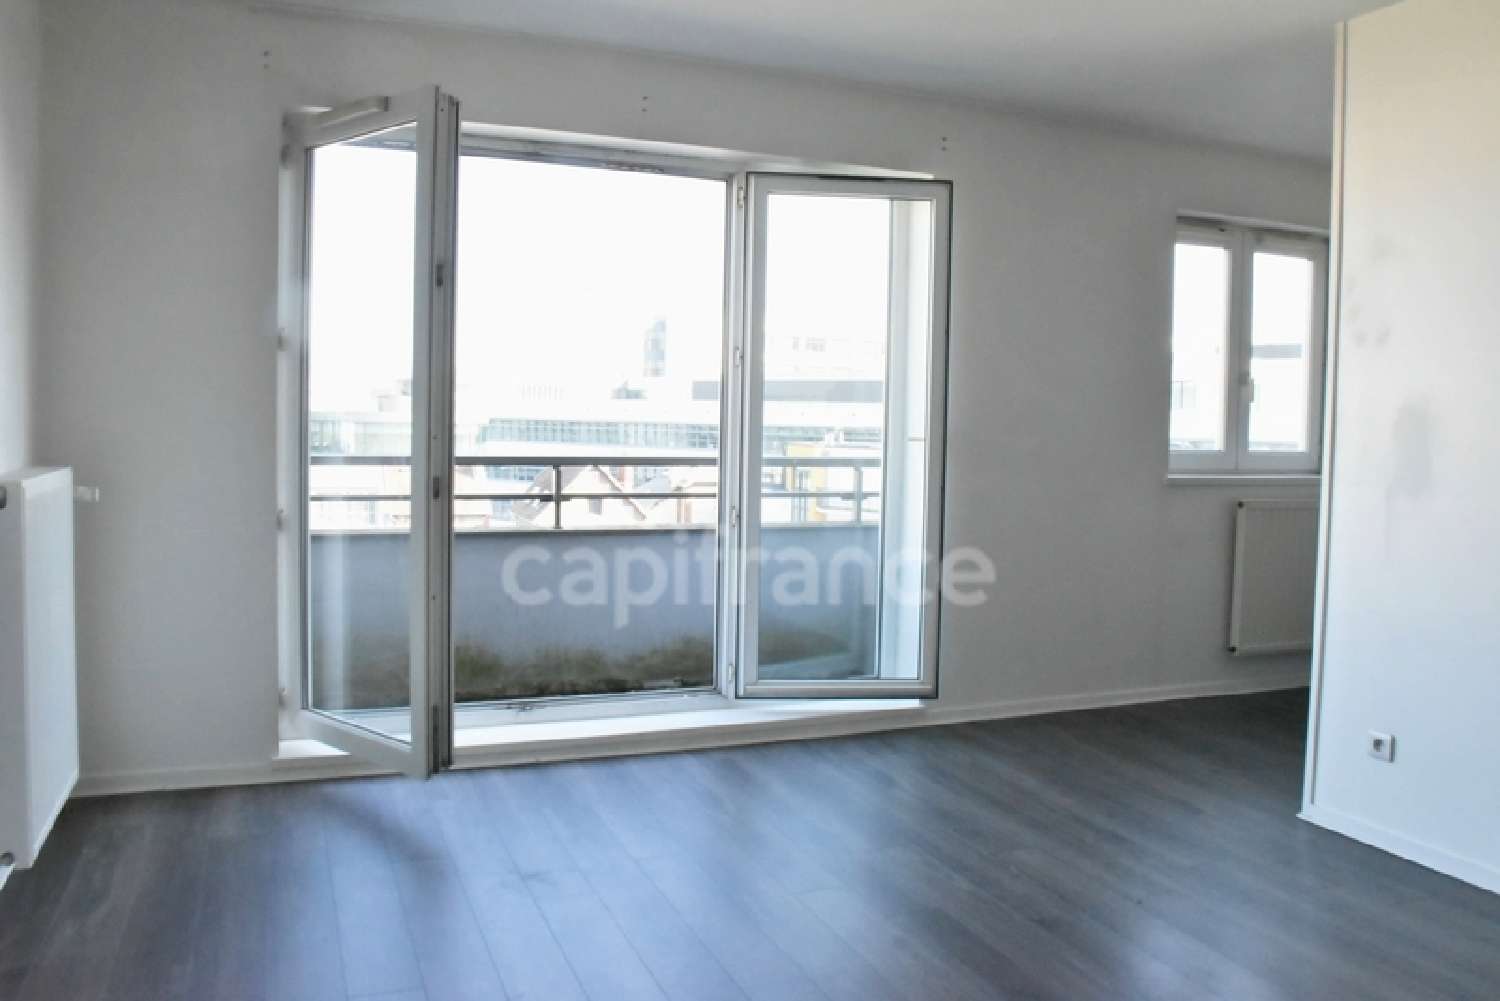  à vendre appartement Rouen 76100 Seine-Maritime 1